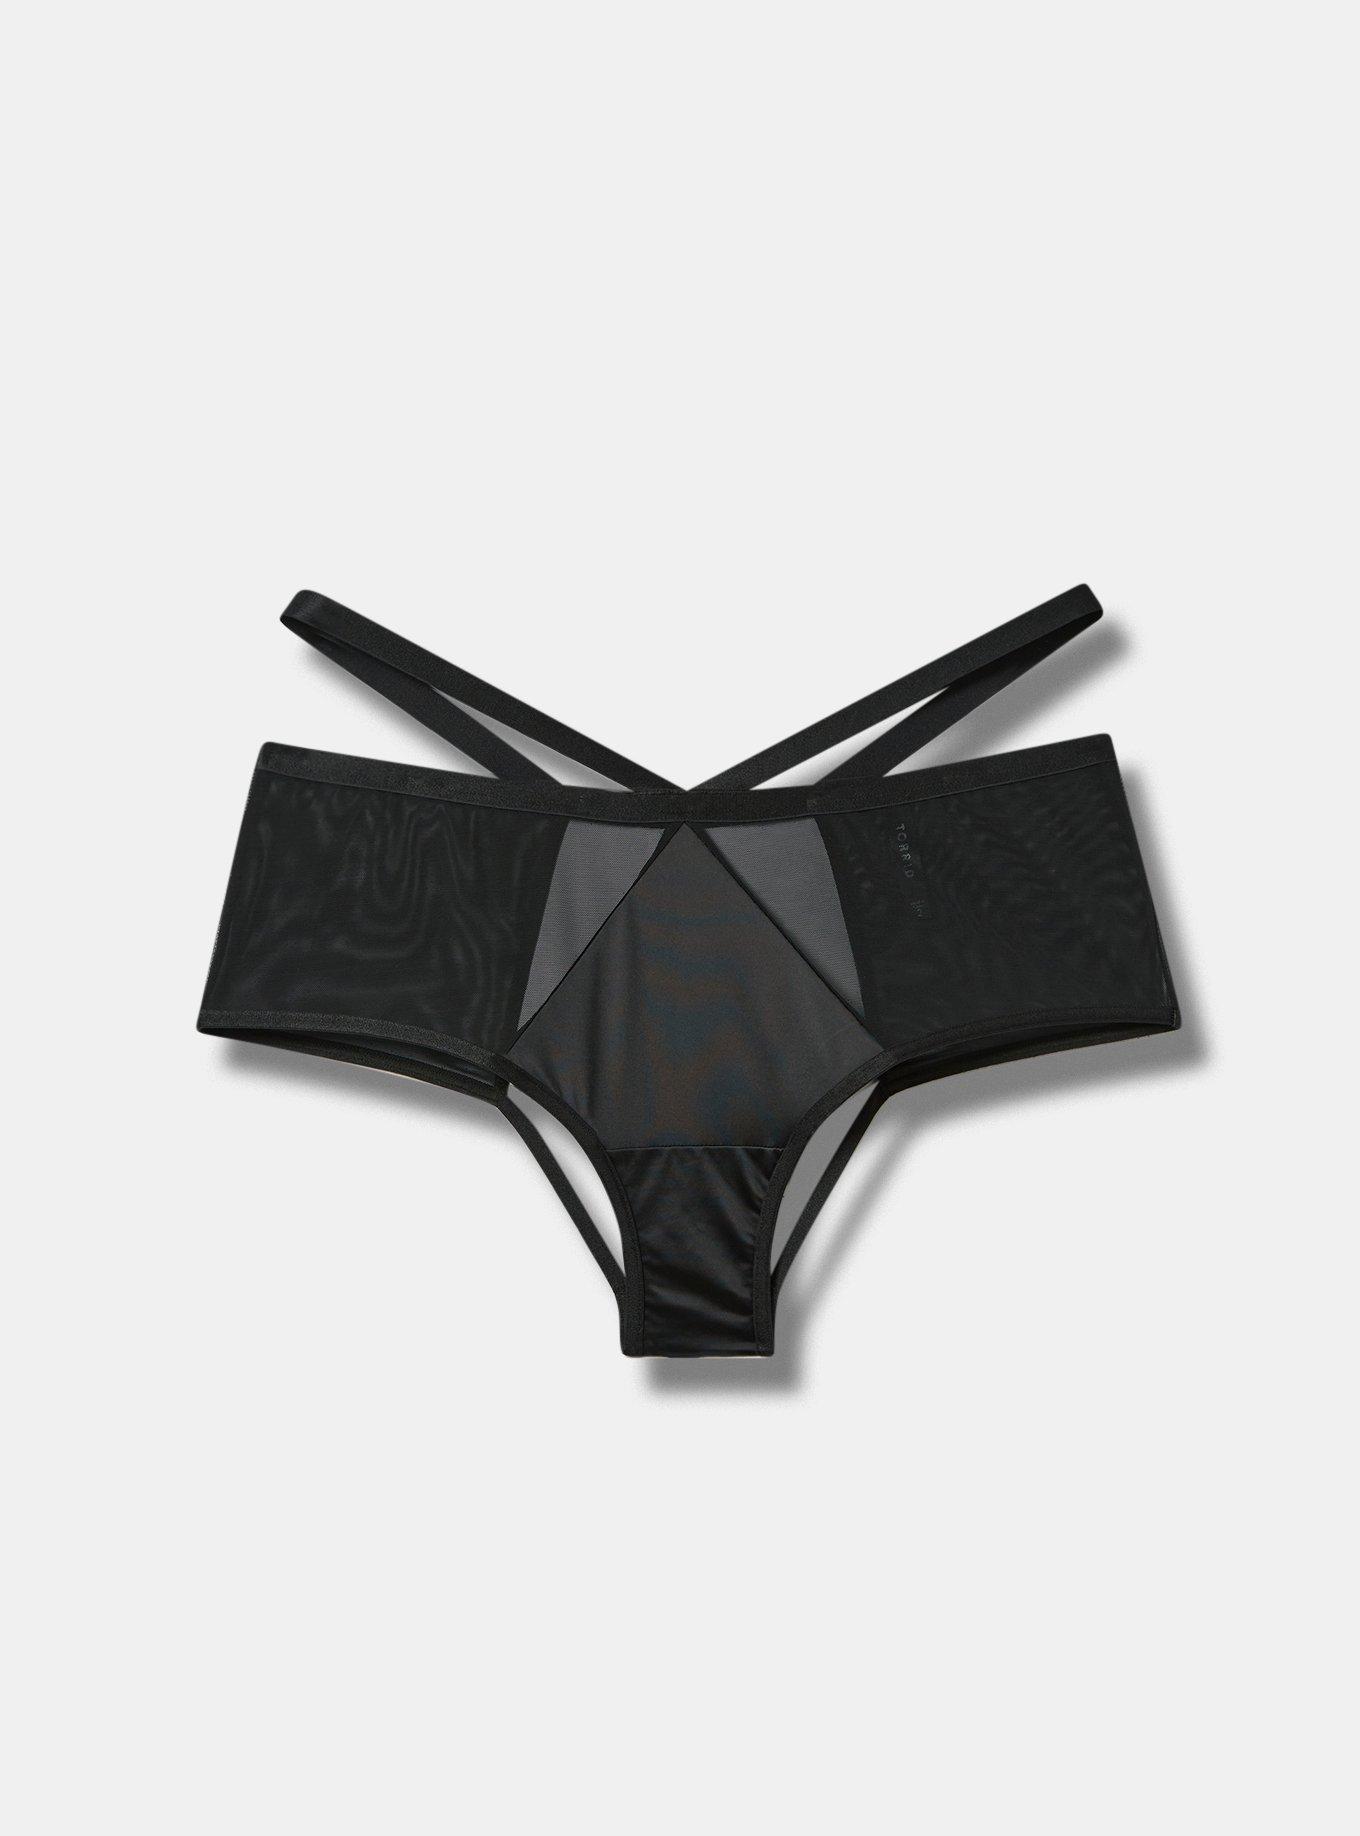 Torrid Silky Black G-string Panty with Black Lace Trim Plus Size 4X, 26